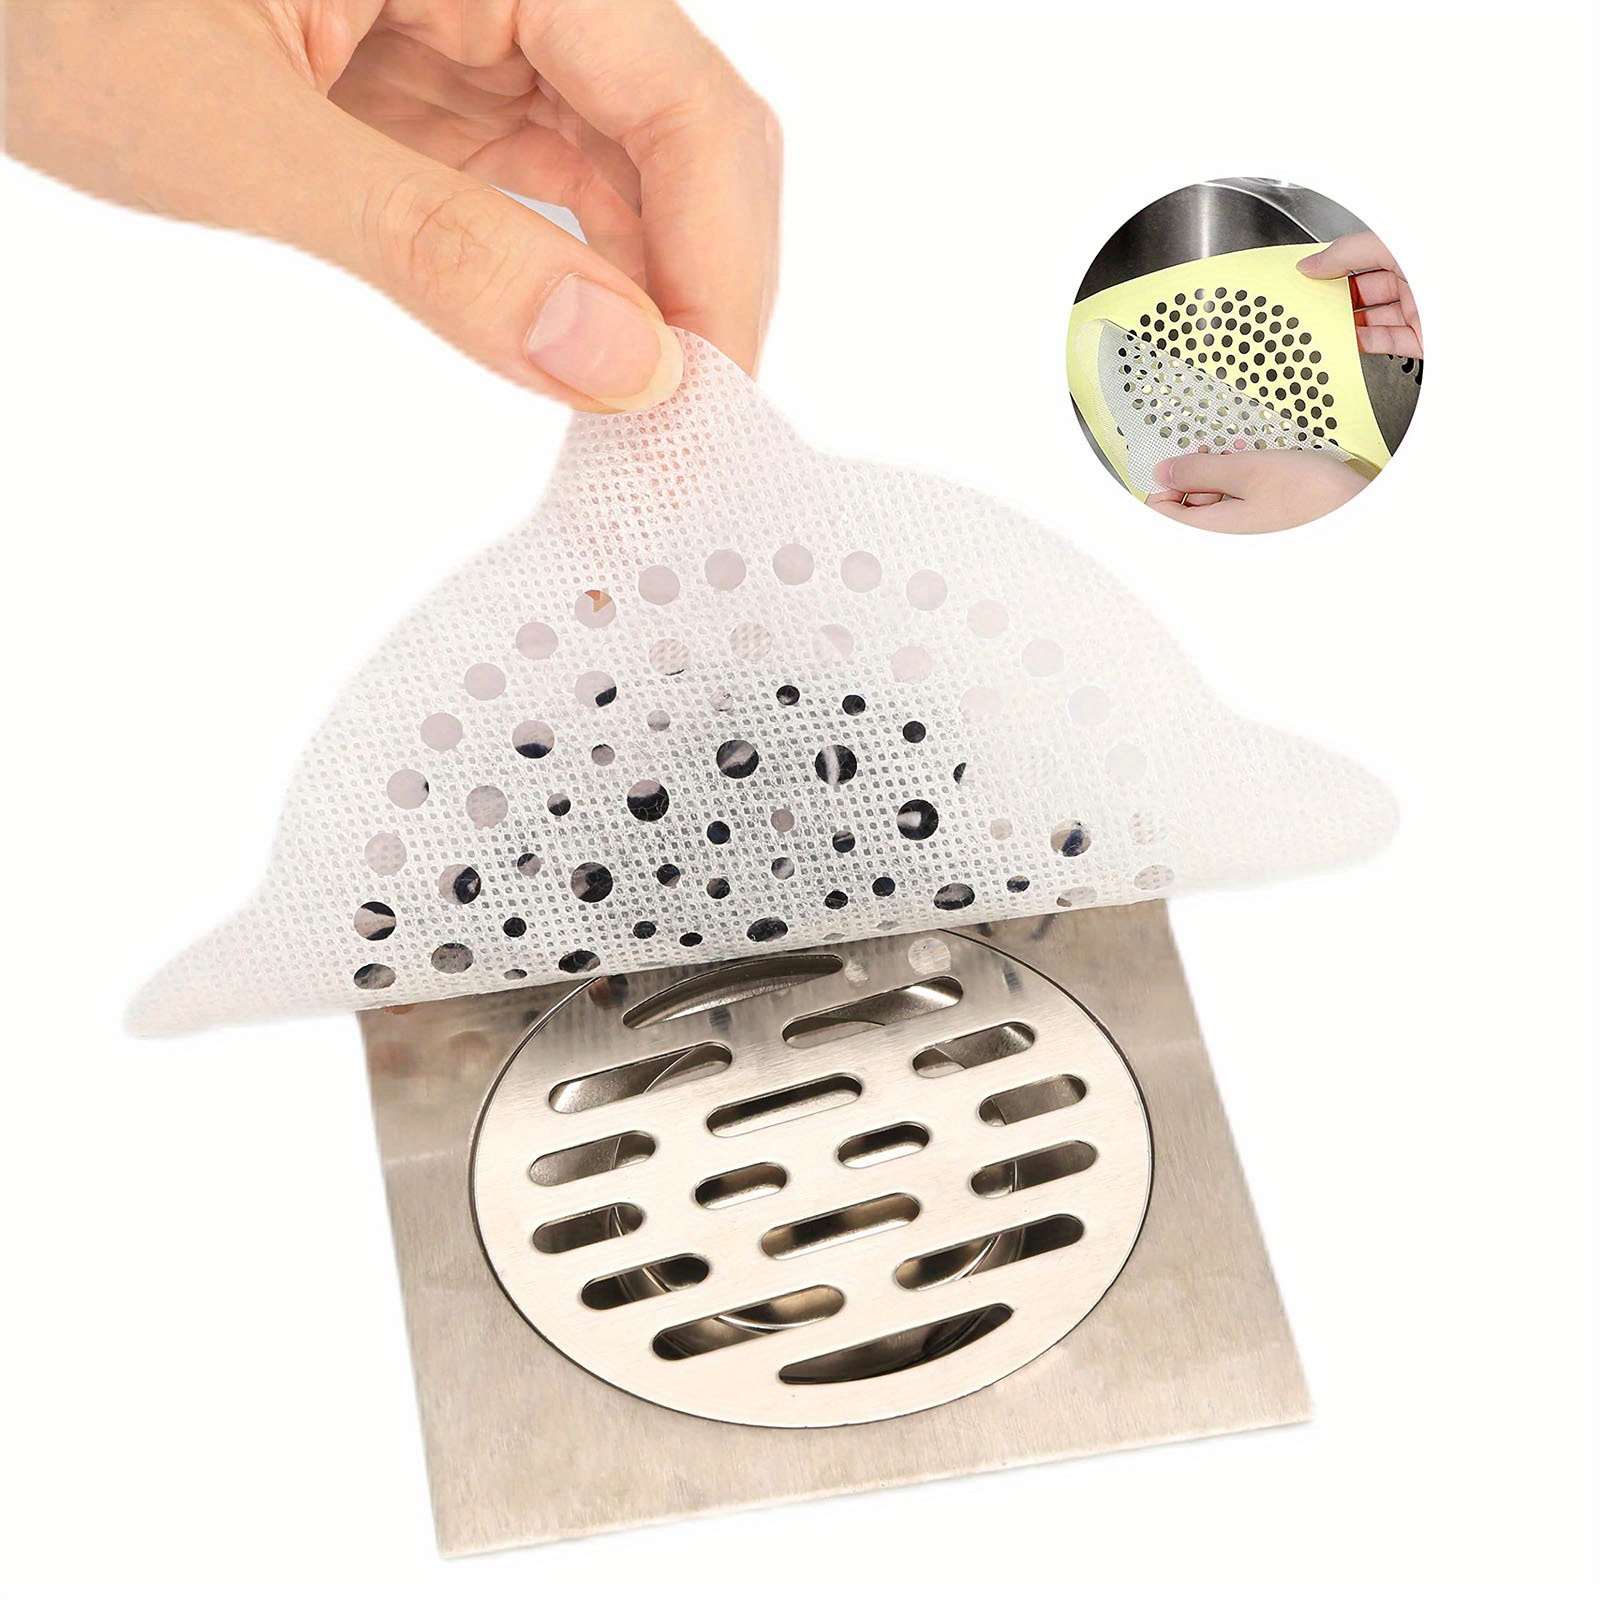 30pcs Disposable Shower Drain Hair Catchers Household Floor Drain